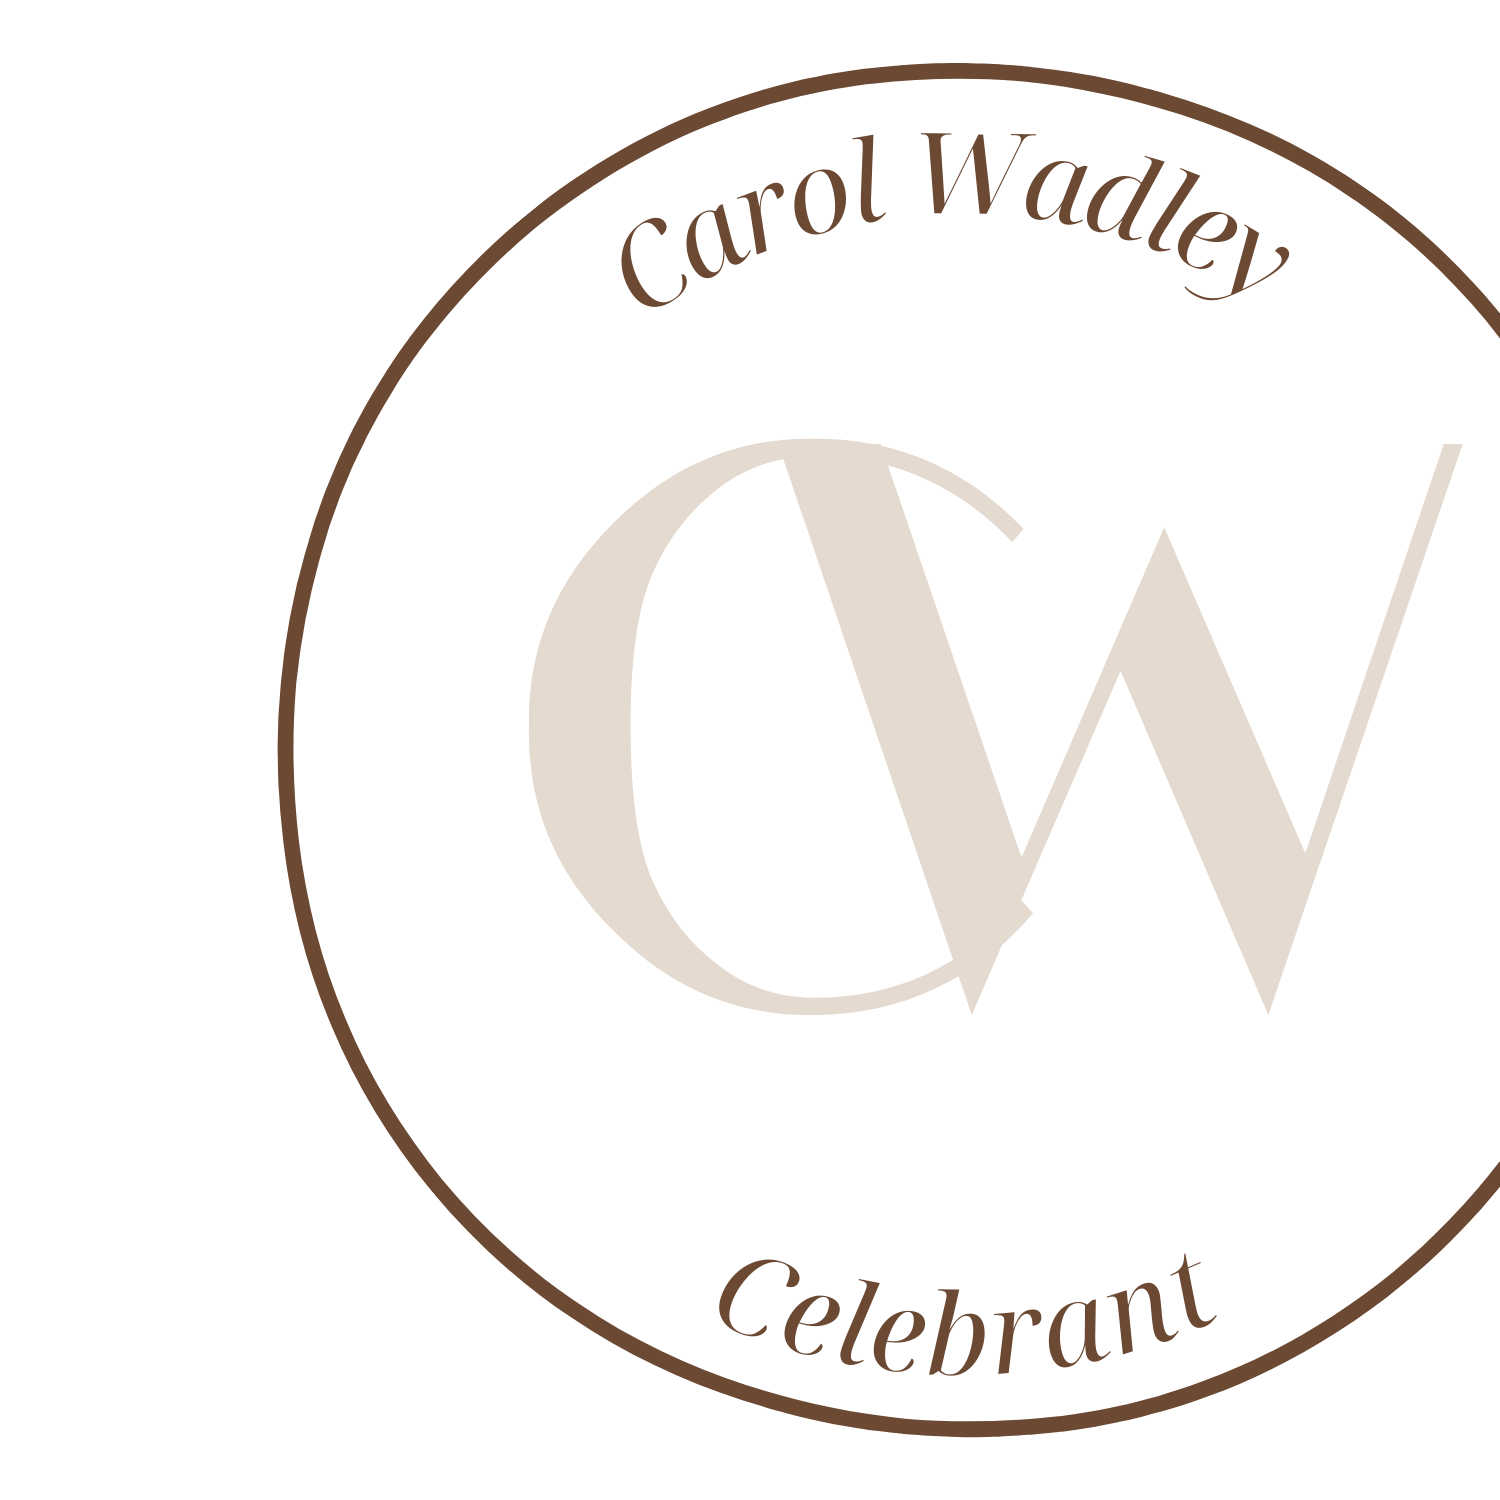 Carol Wadley Celebrant